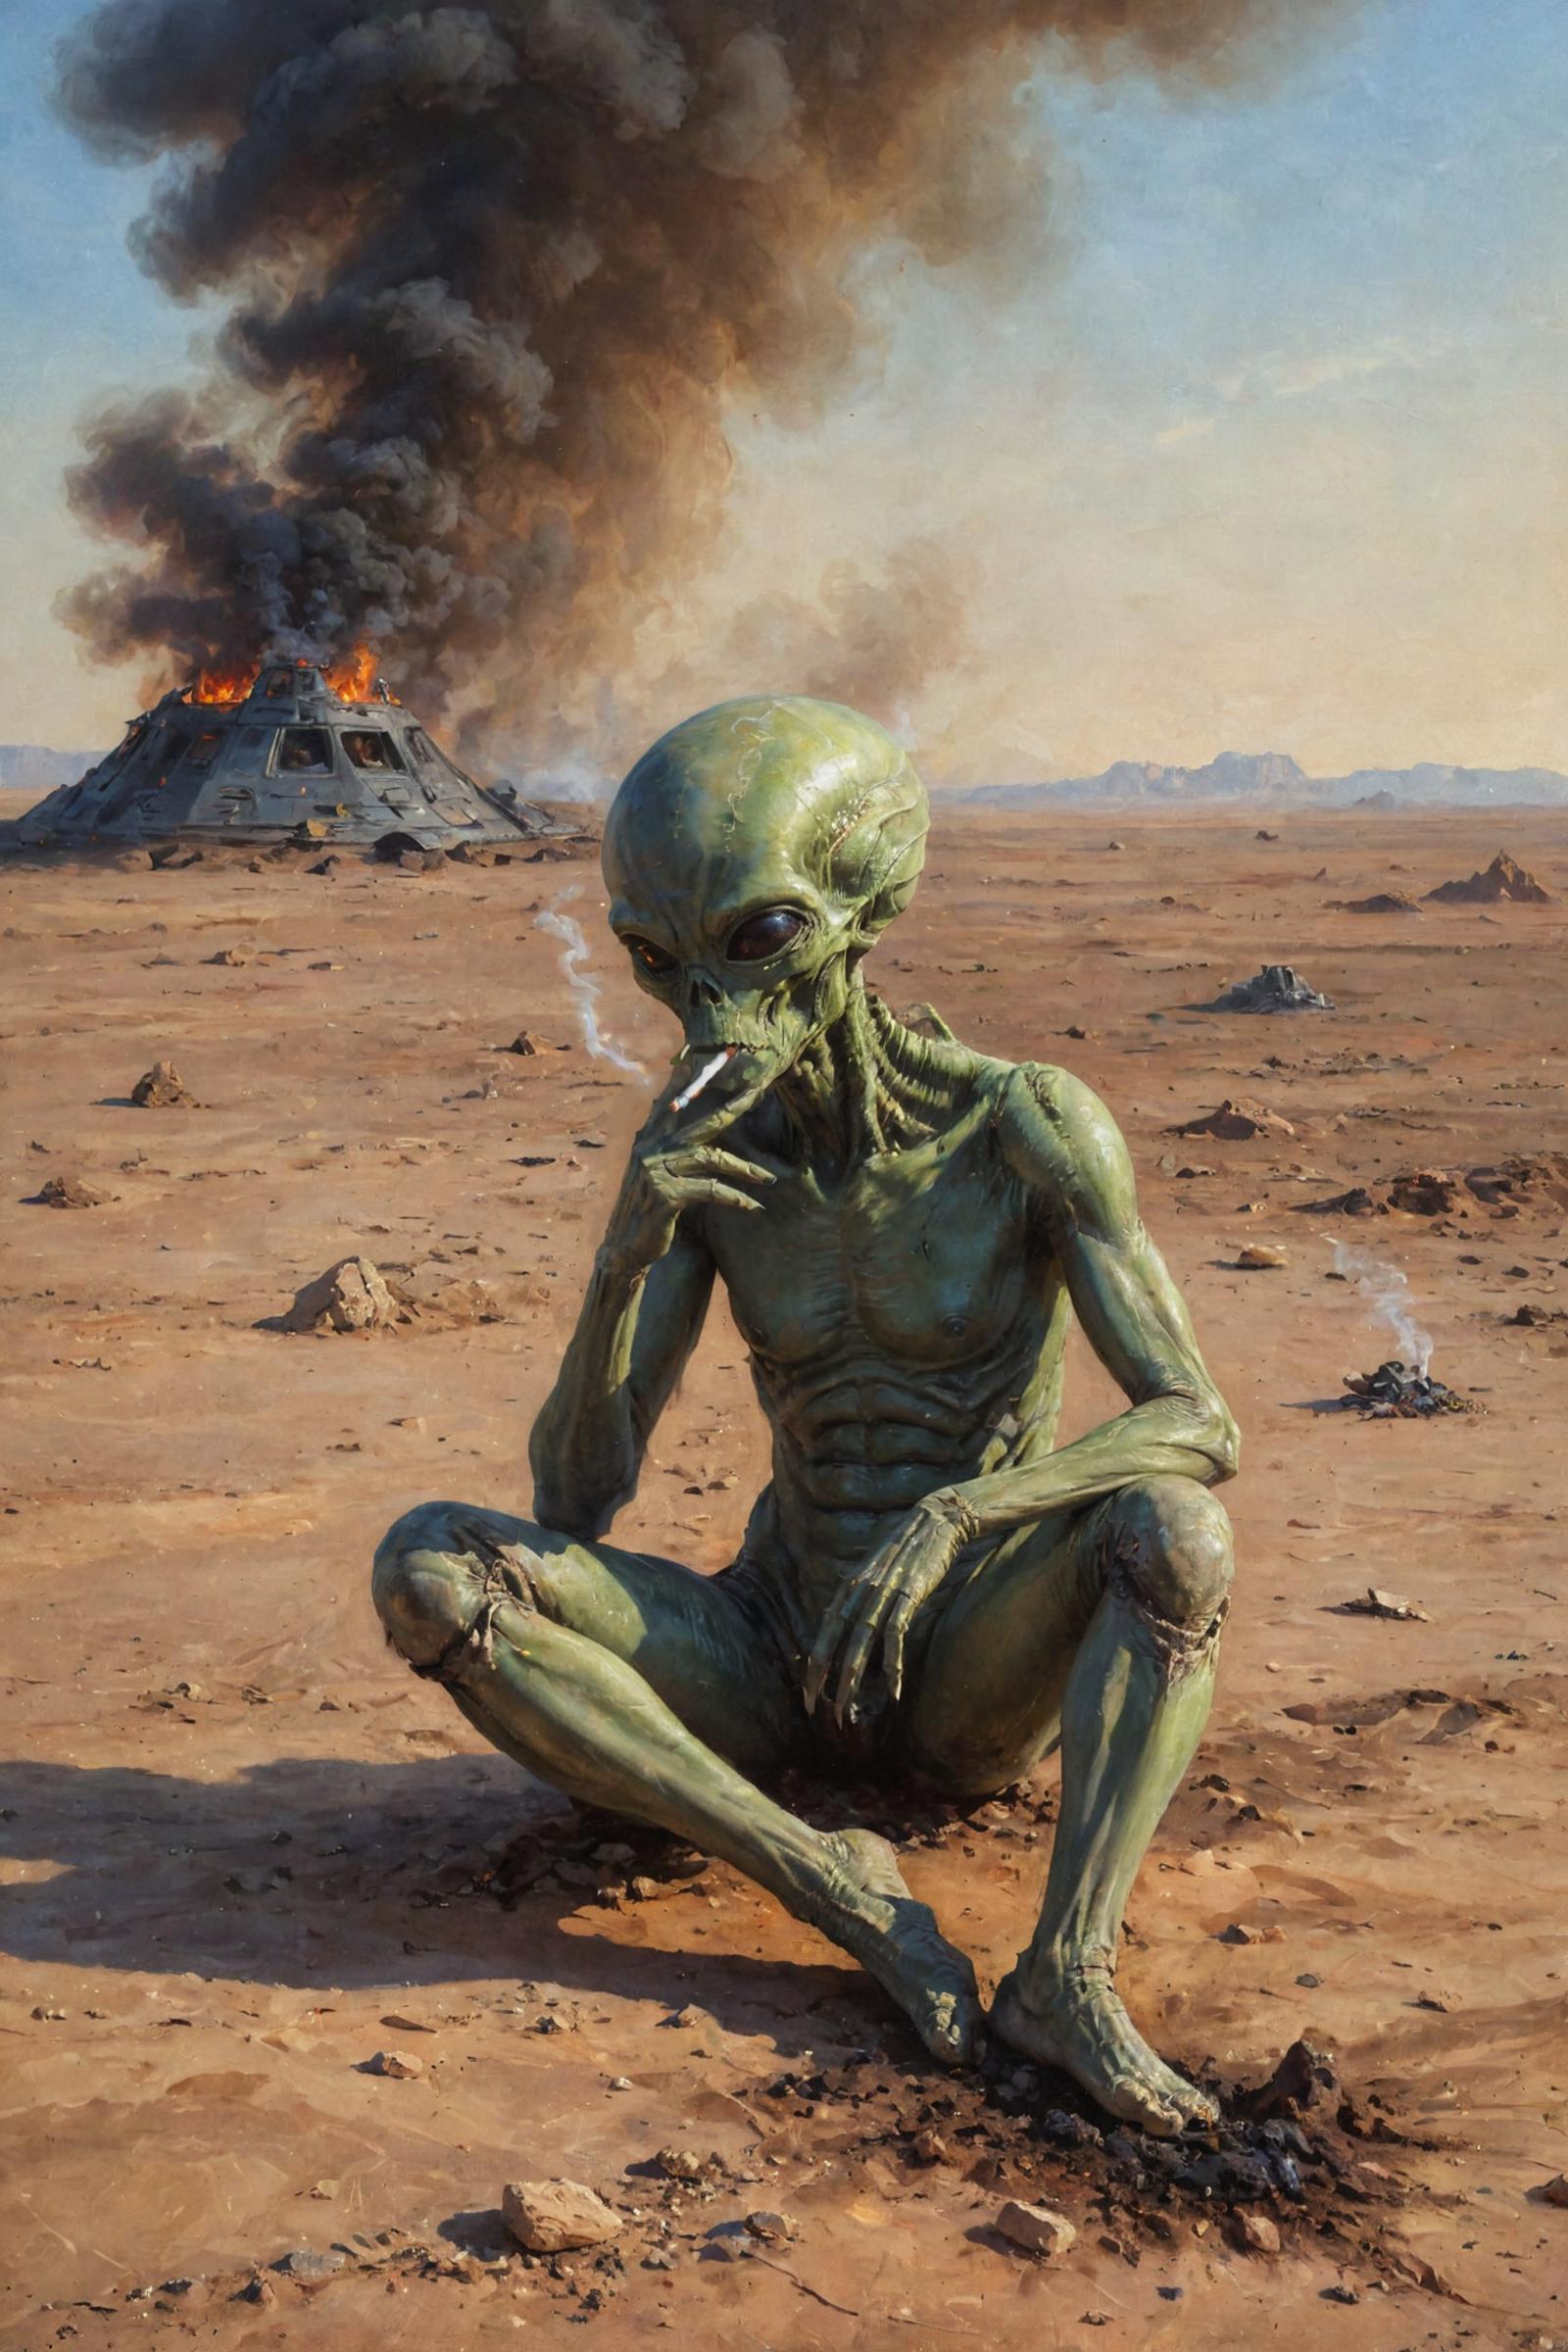 A skeletal alien creature sitting in the desert smoking a cigarette.